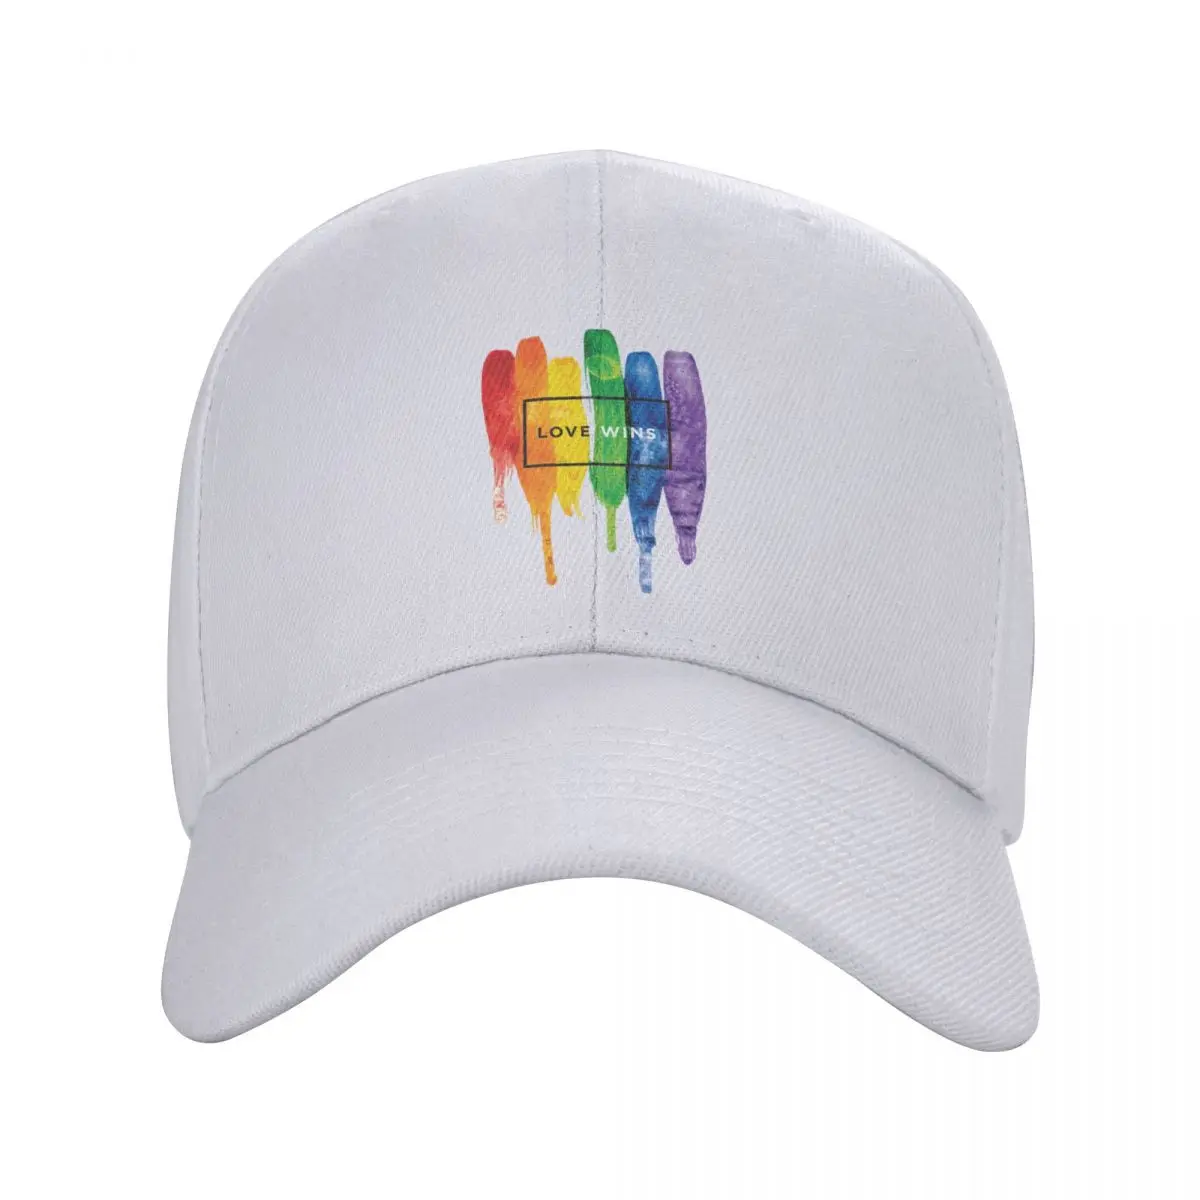 Punk Love Wins Rainbow LGBT Baseball Cap for Women Men Breathable Gay Pride Lesbian Dad Hat Performance Snapback Caps